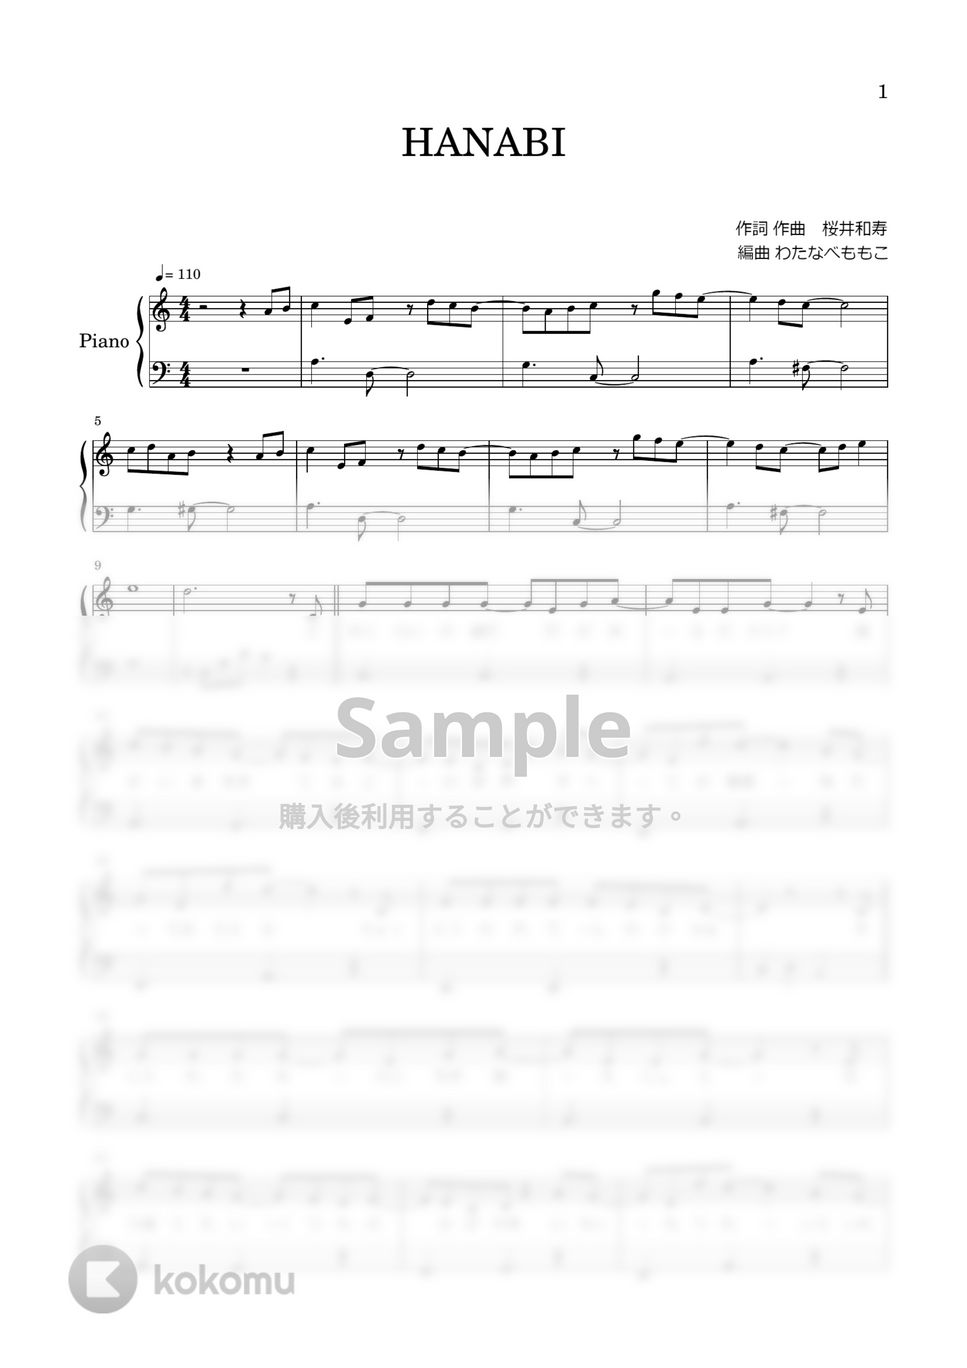 HANABI by Piano. by Mio